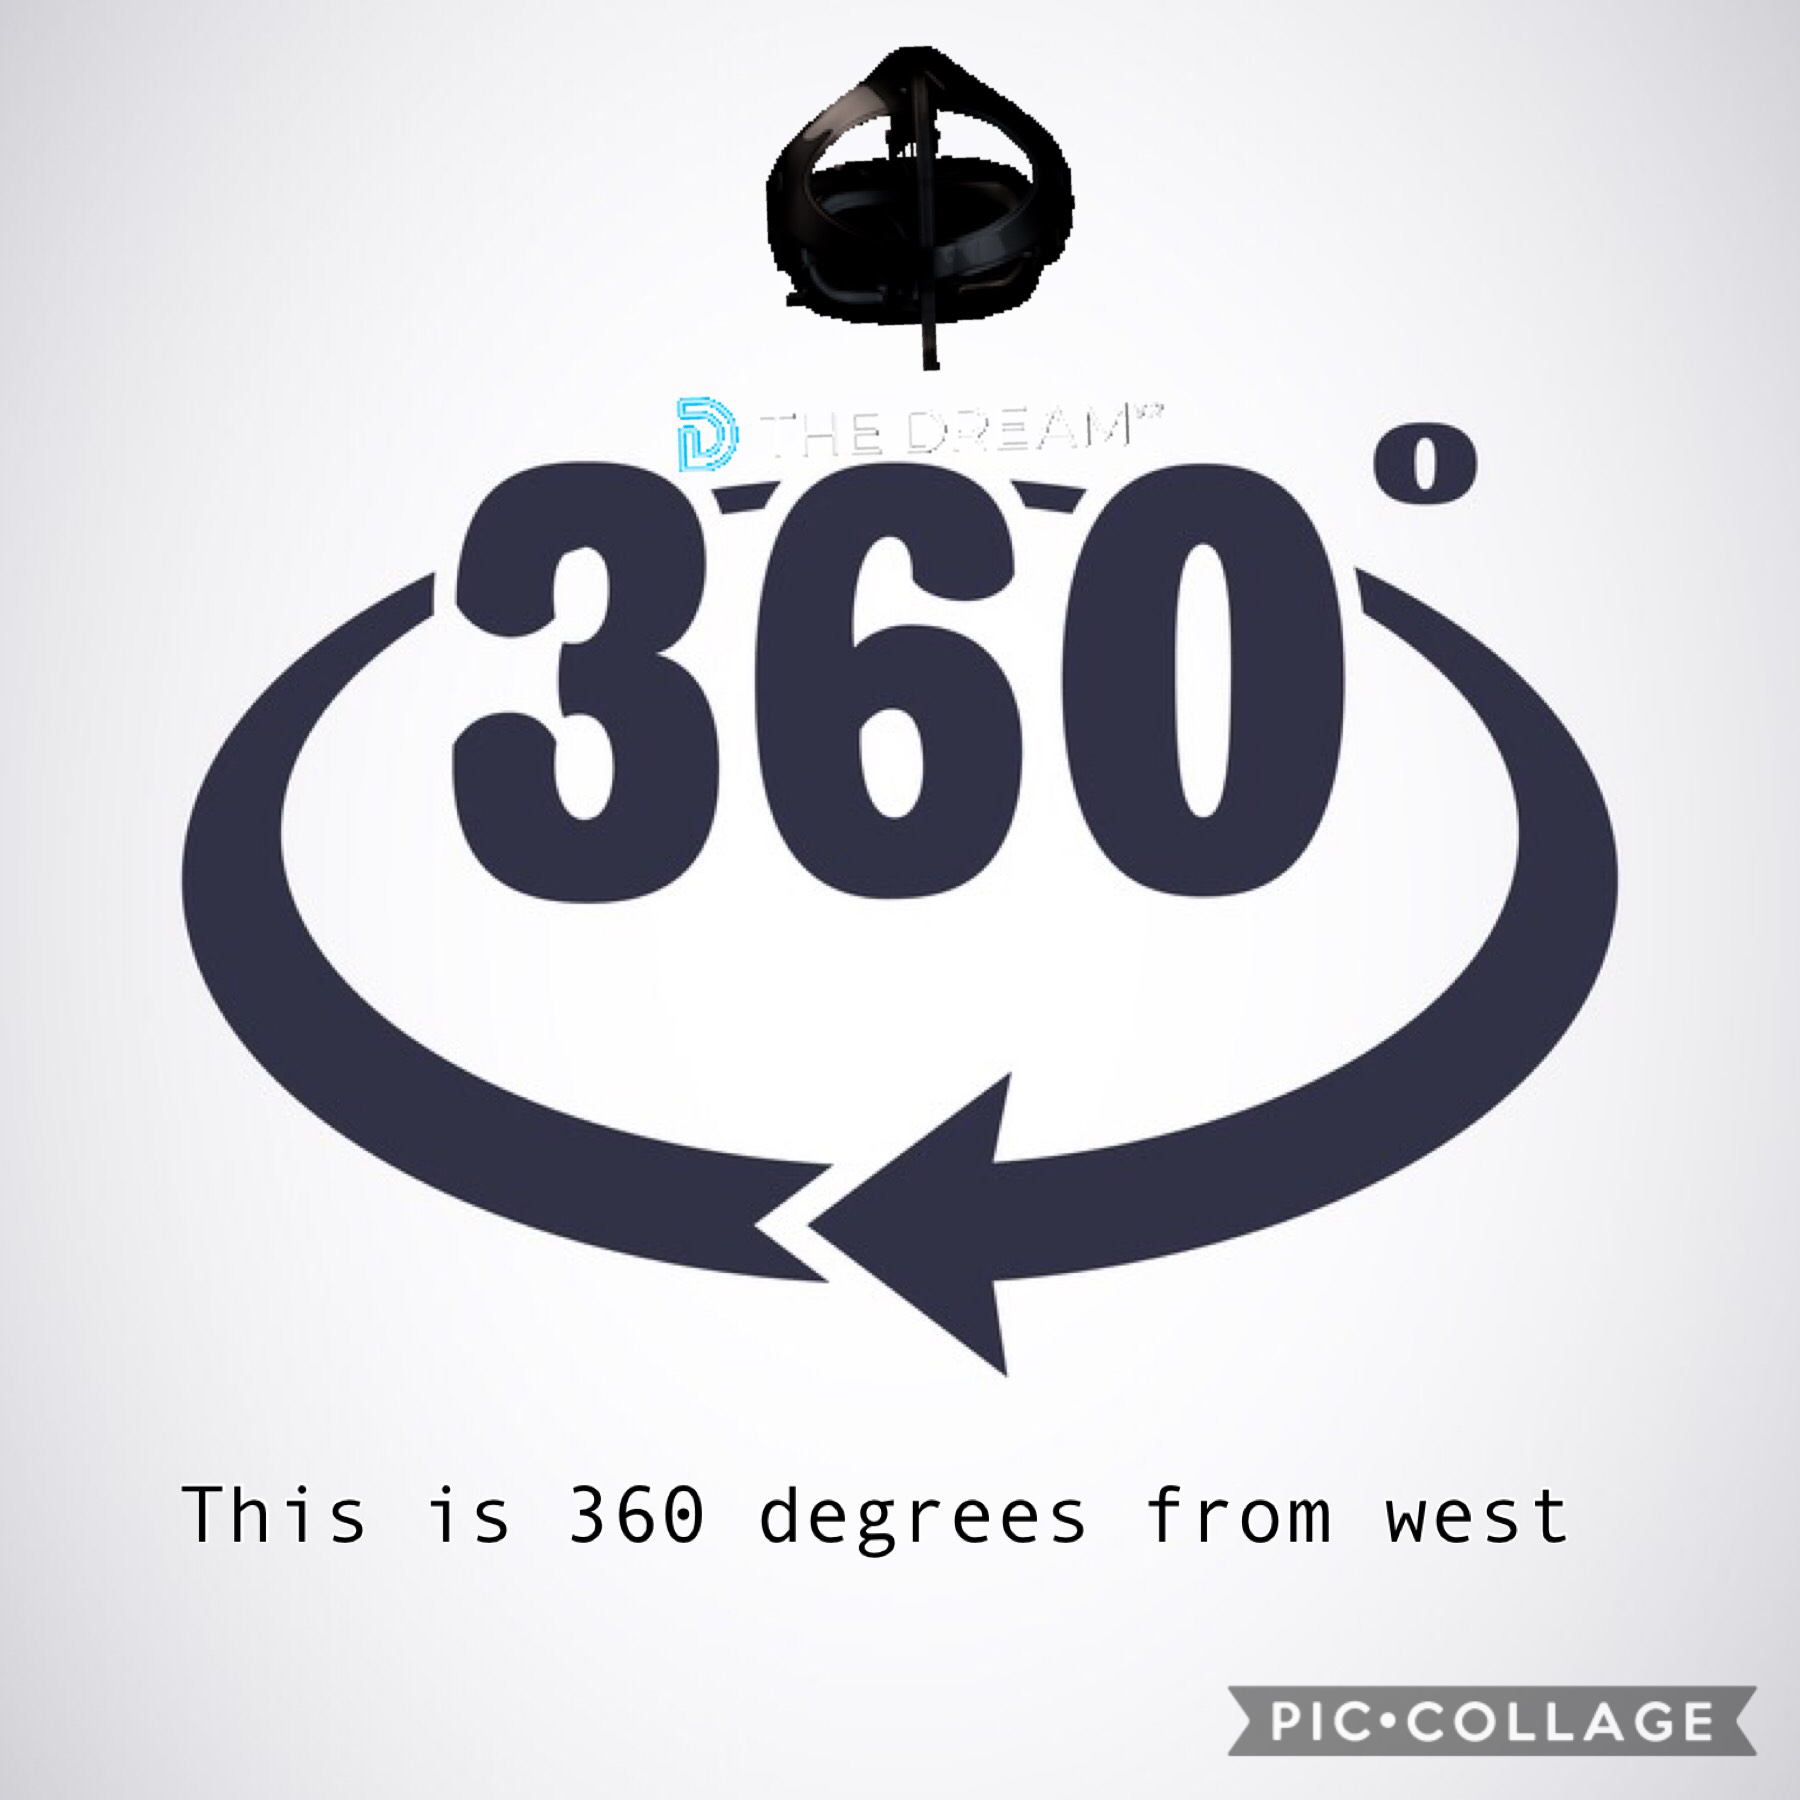 360 degree image I made